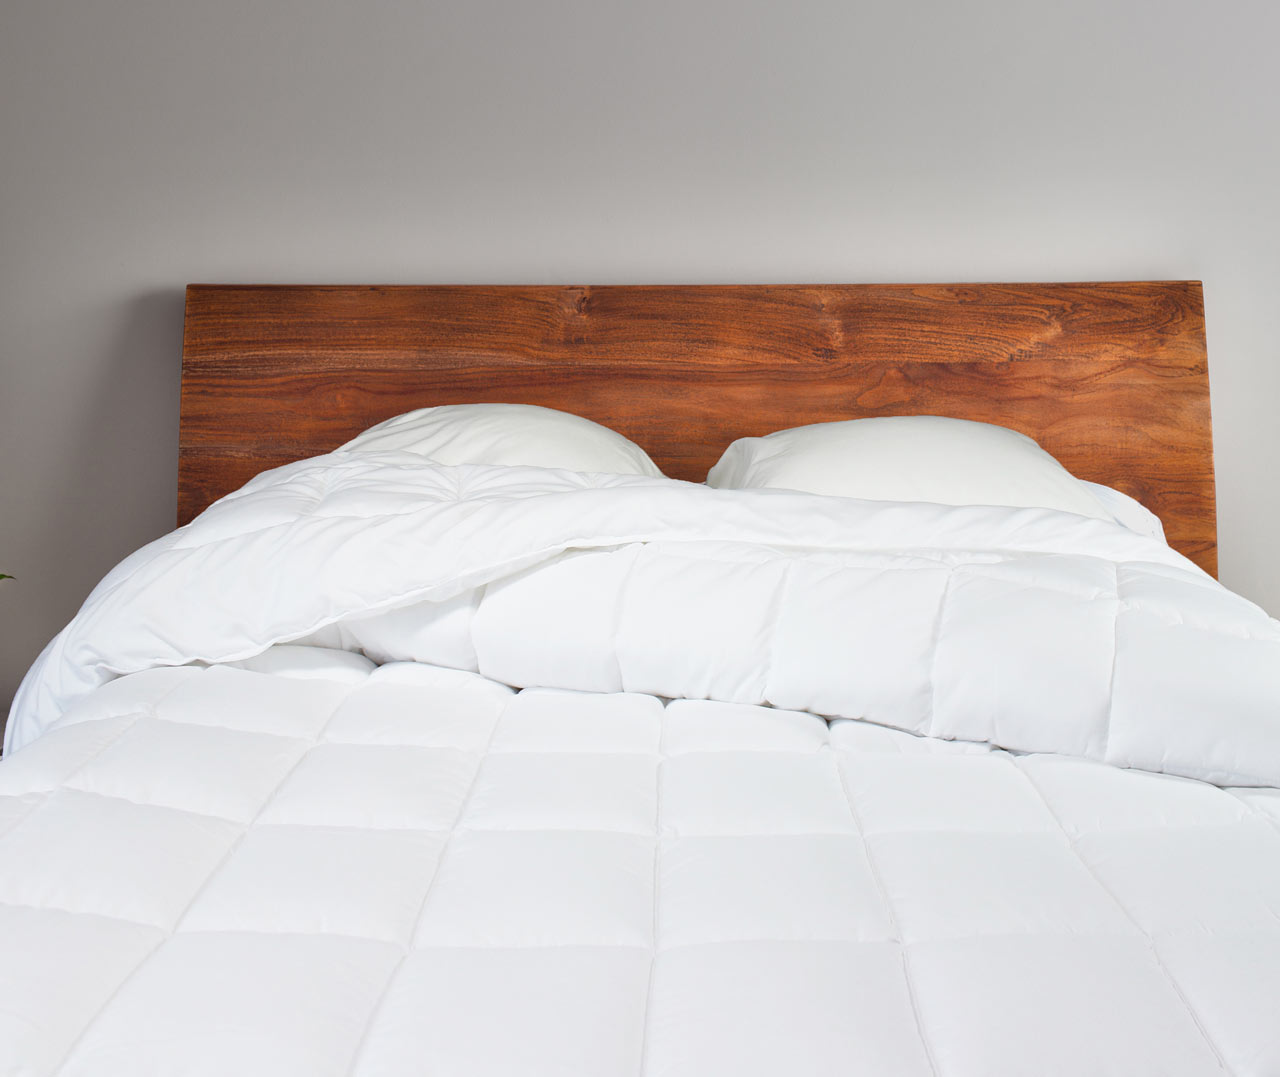 Comforter-with-wood-headboard-close-web